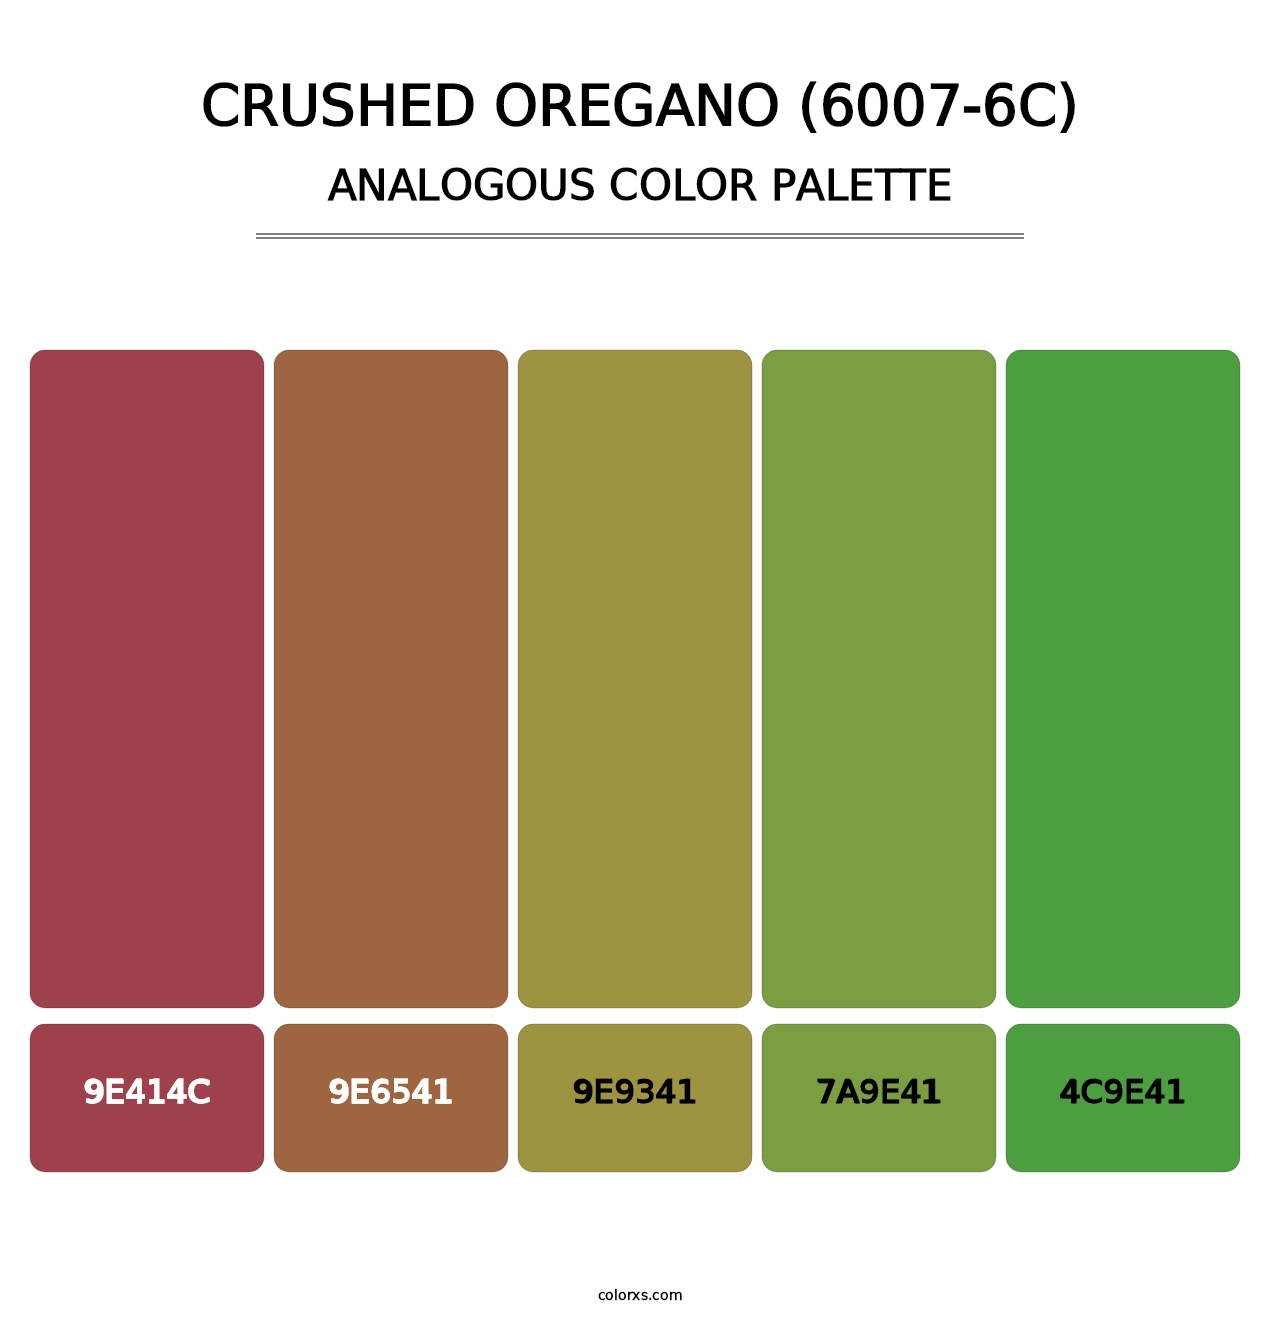 Crushed Oregano (6007-6C) - Analogous Color Palette